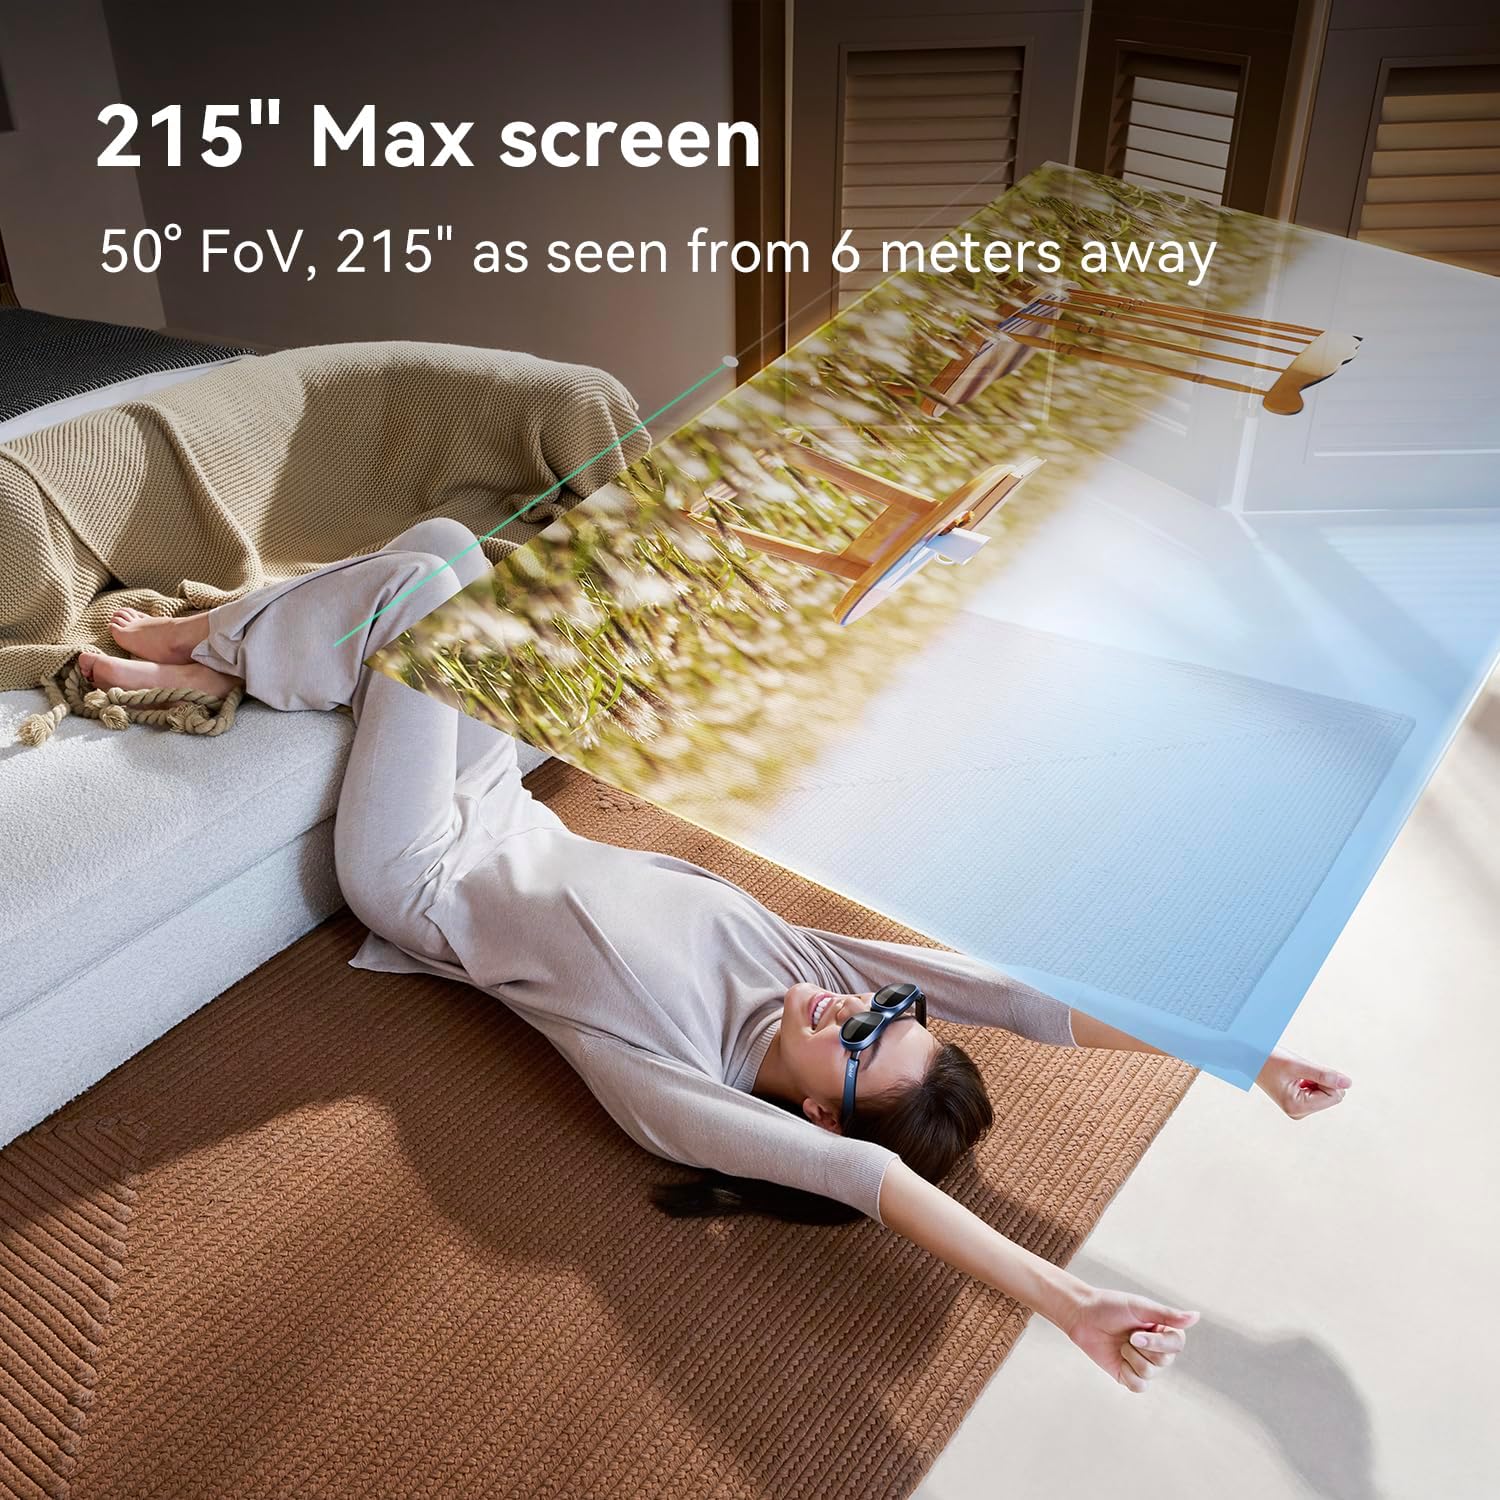 2023 HOT Sale Rokid Max AR Smart Glasses Headband Augmented Reality Display 3d Video VR AR Glasses | Electrr Inc